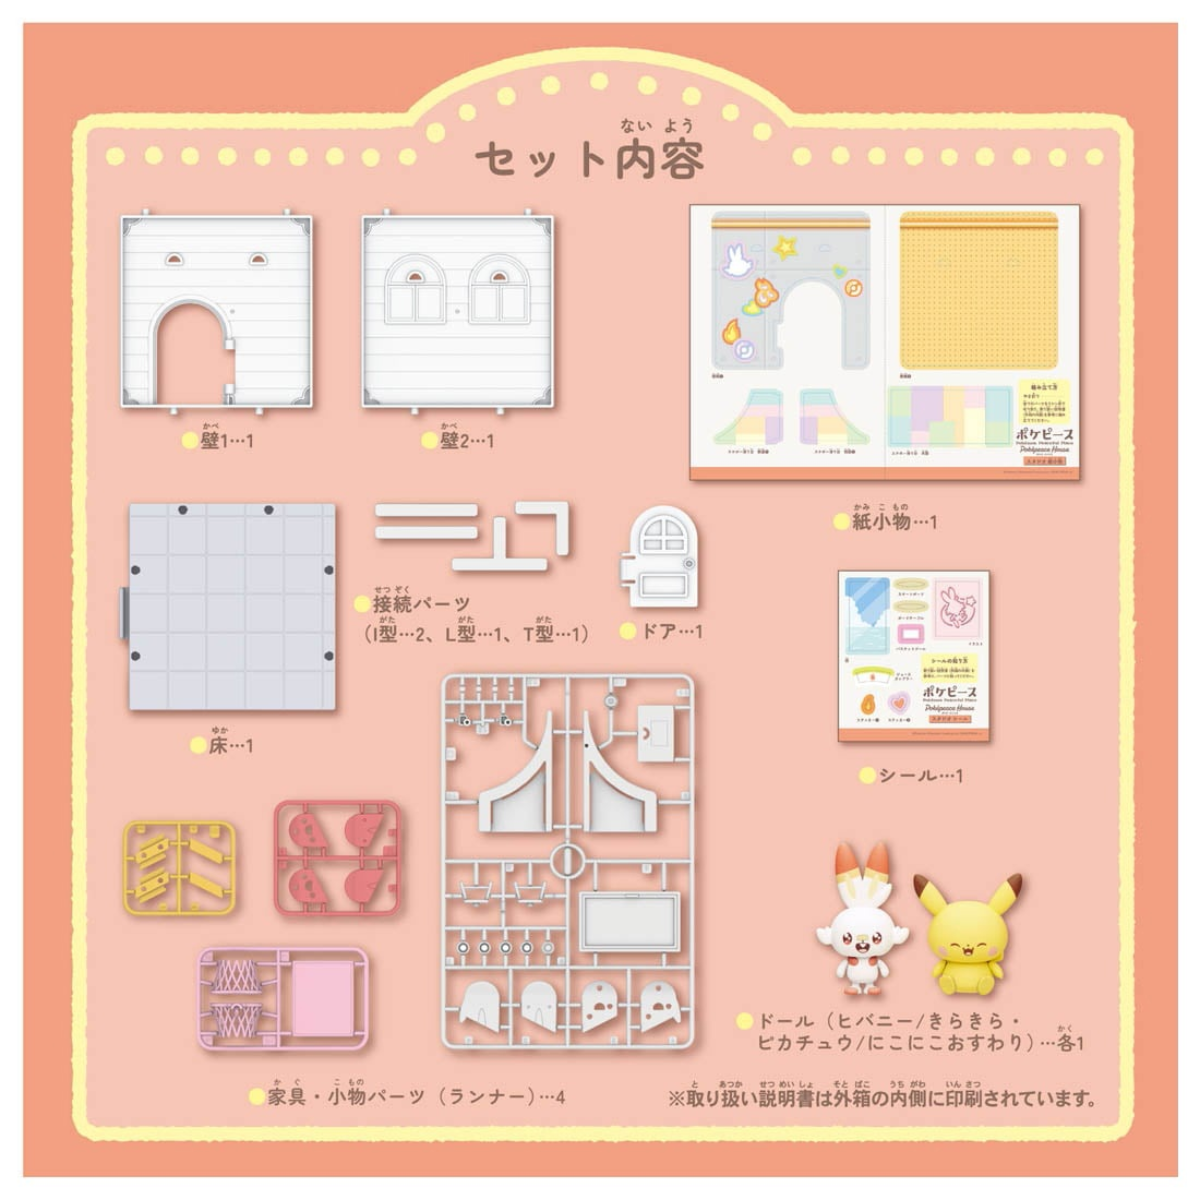 Pokemon Pokepeace House Stadium "Scprnimmy & Pikachu"-Takara Tomy-Ace Cards & Collectibles